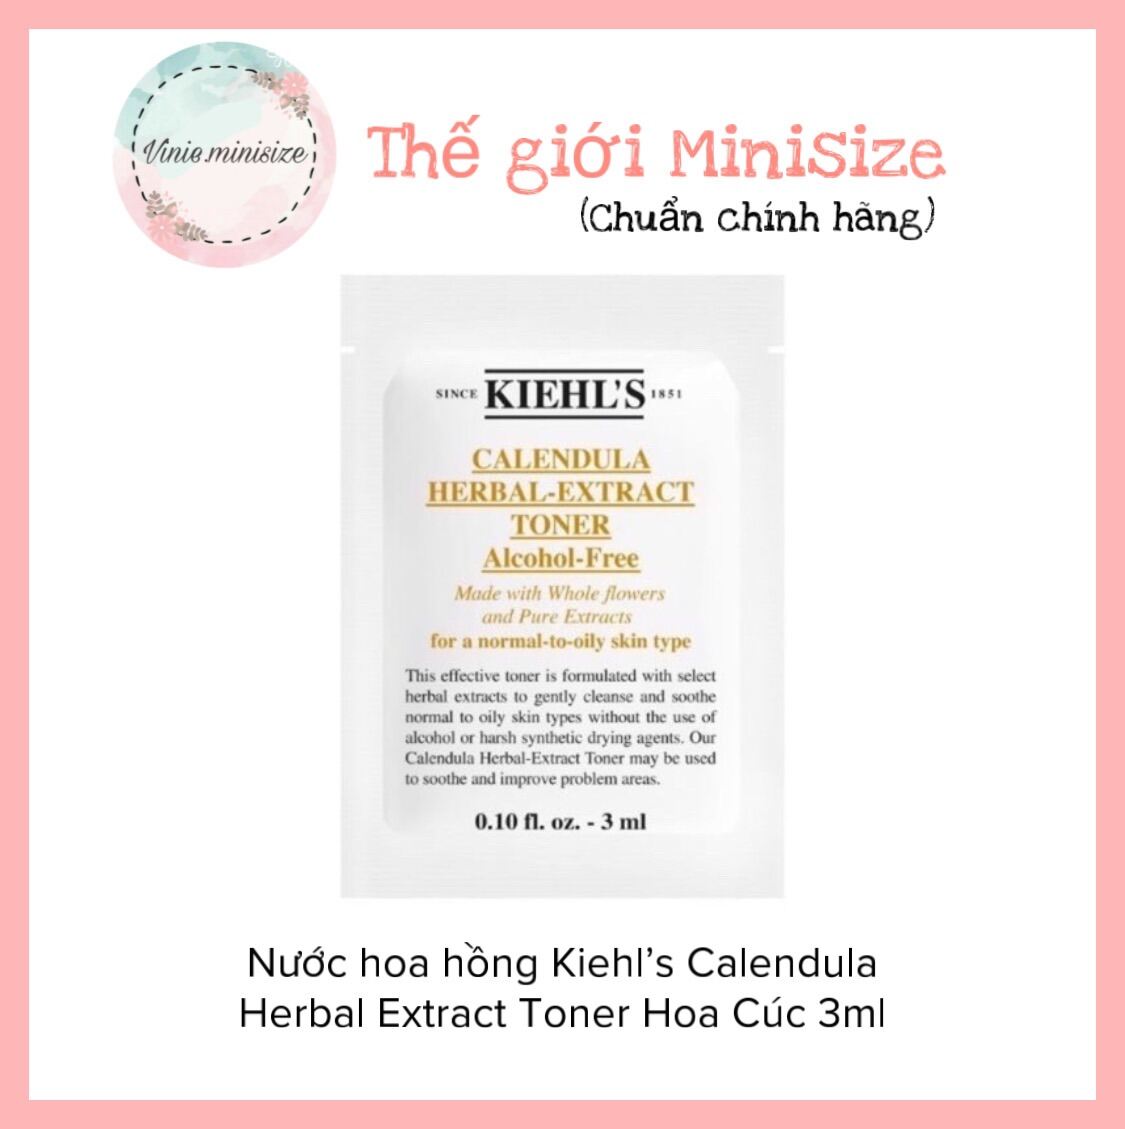 Nước hoa hồng Kiehl’s Calendula Herbal Extract Toner Hoa Cúc 3ml | Vinie.minisize [Sample-Có sẵn] giá rẻ